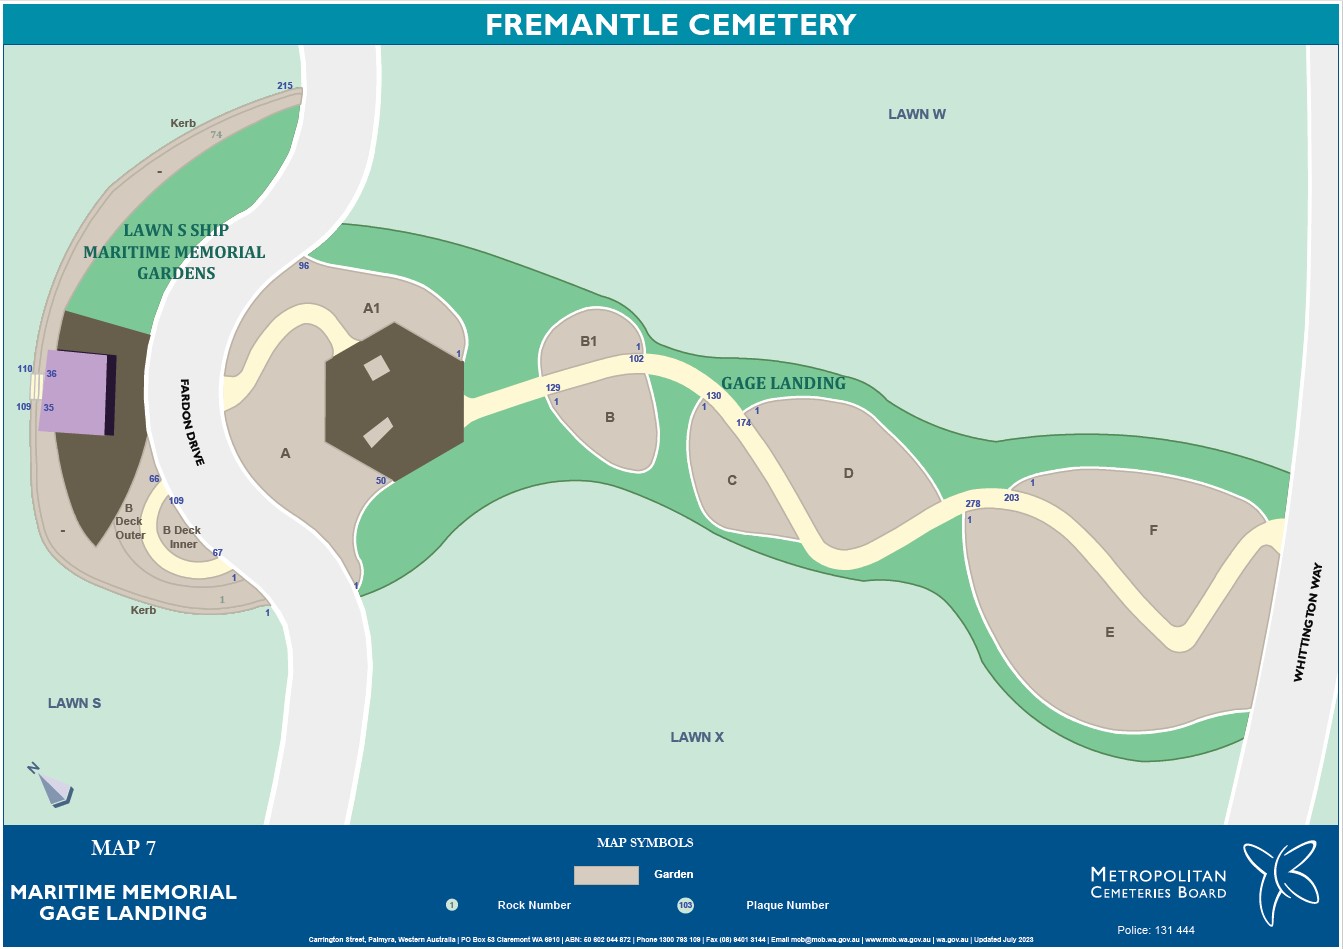 Map 7 Maritime Memorial Gage Landing Fremantle Cemetery